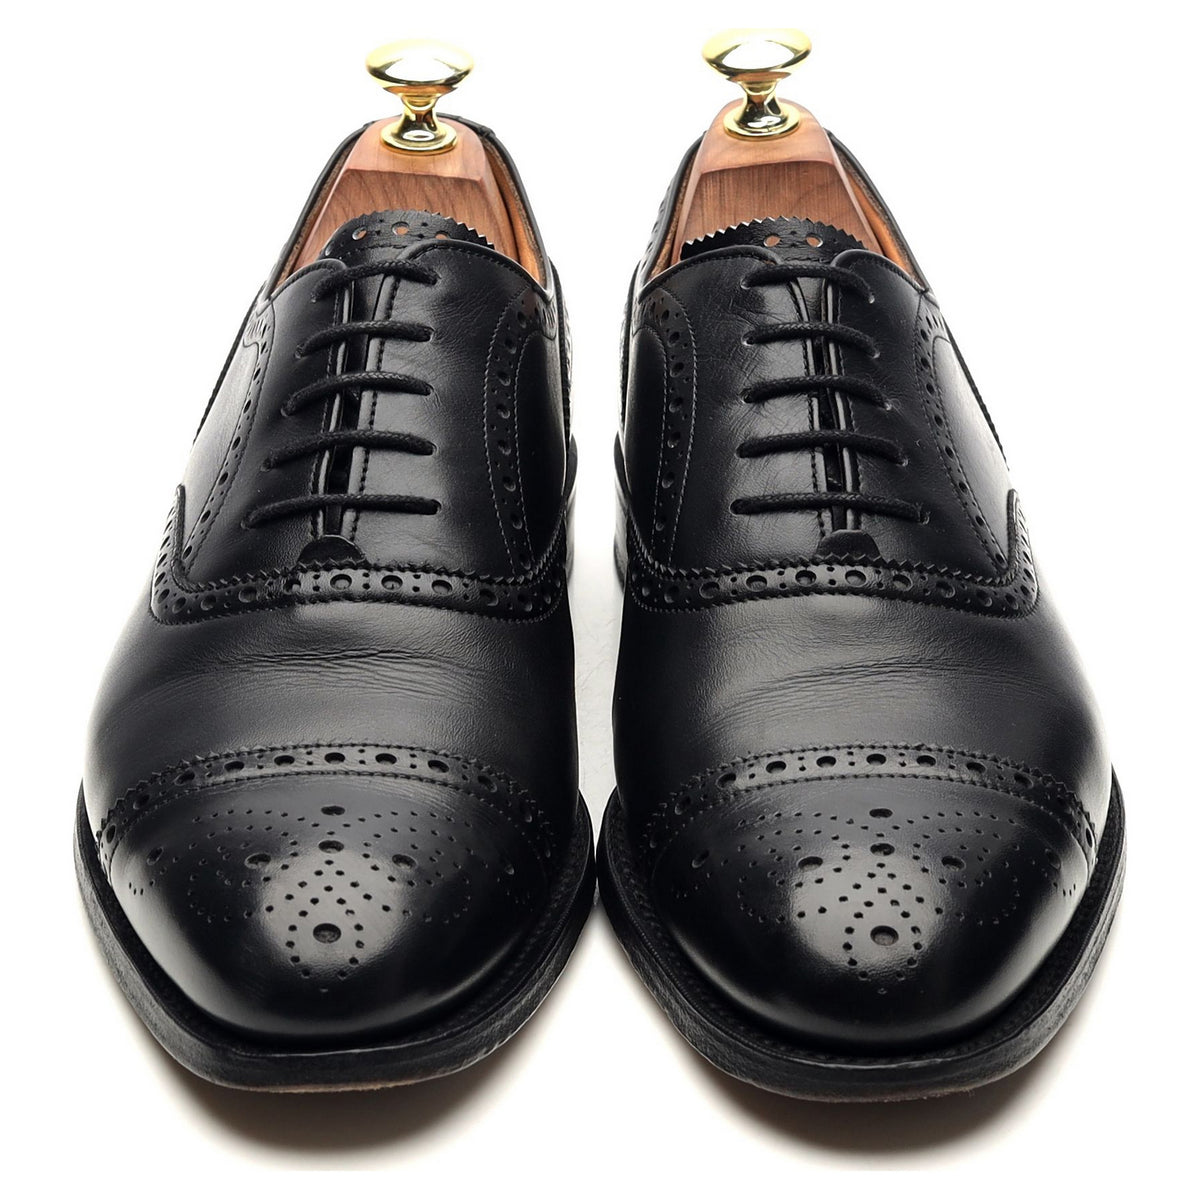 Black Leather Oxford Semi Brogues UK 7.5 E